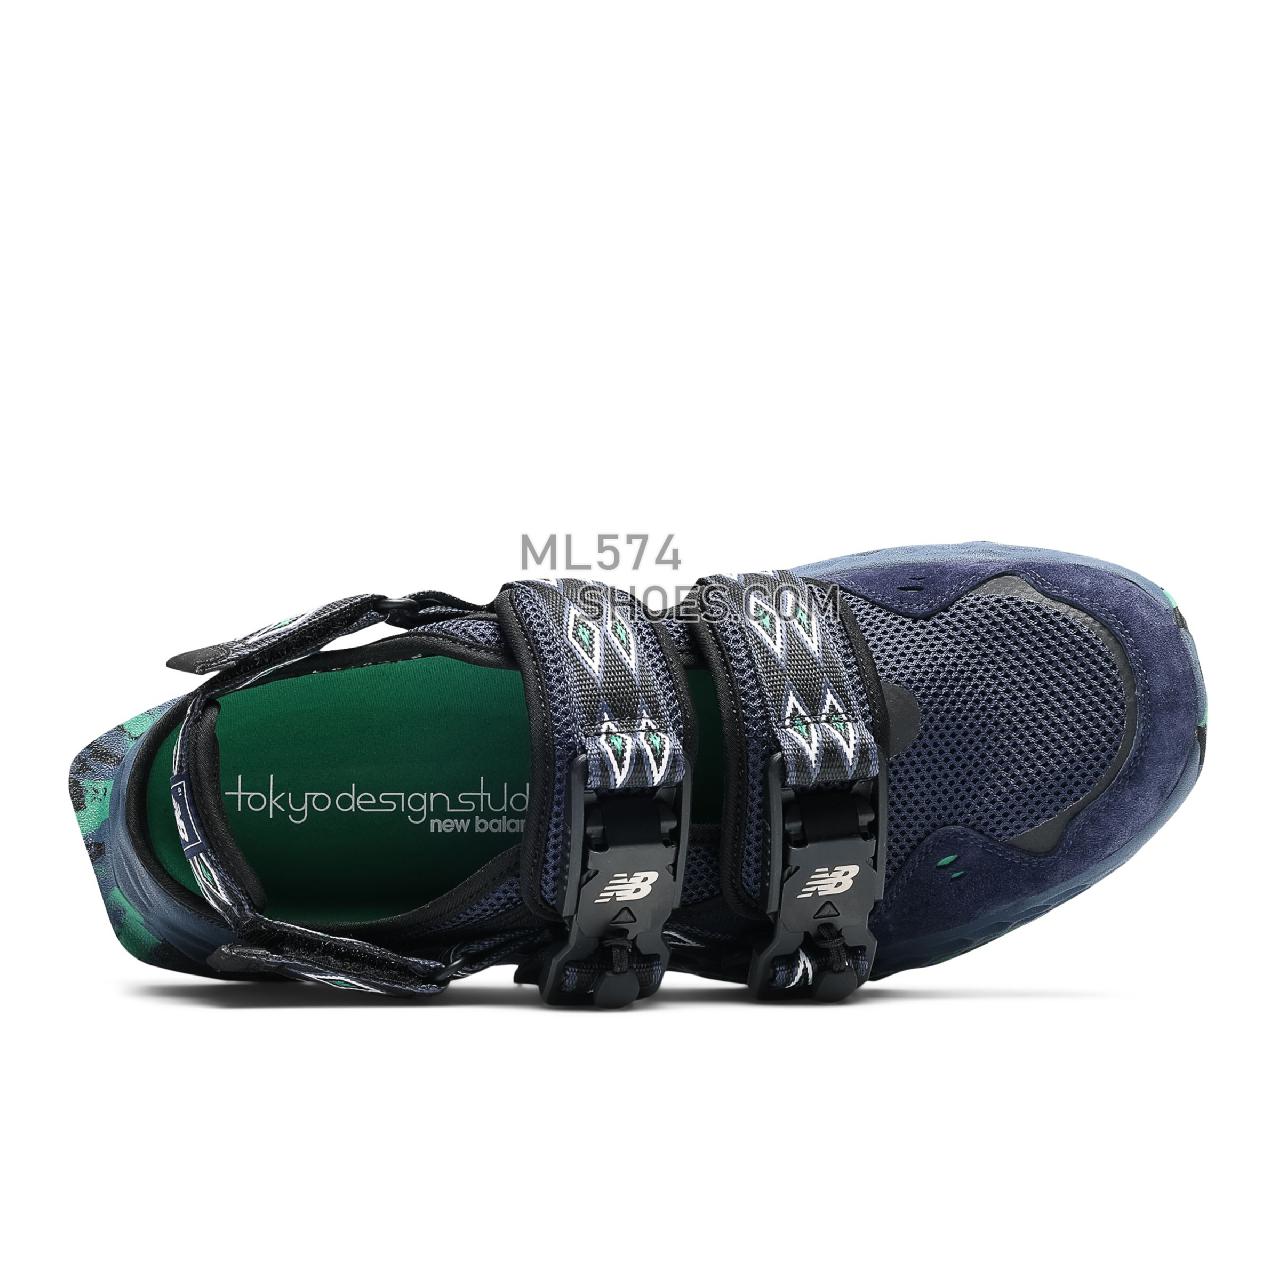 New Balance Niobium Concept 2 - Men's Sandals - Pigment with Natural Indigo - MSNB2NC2